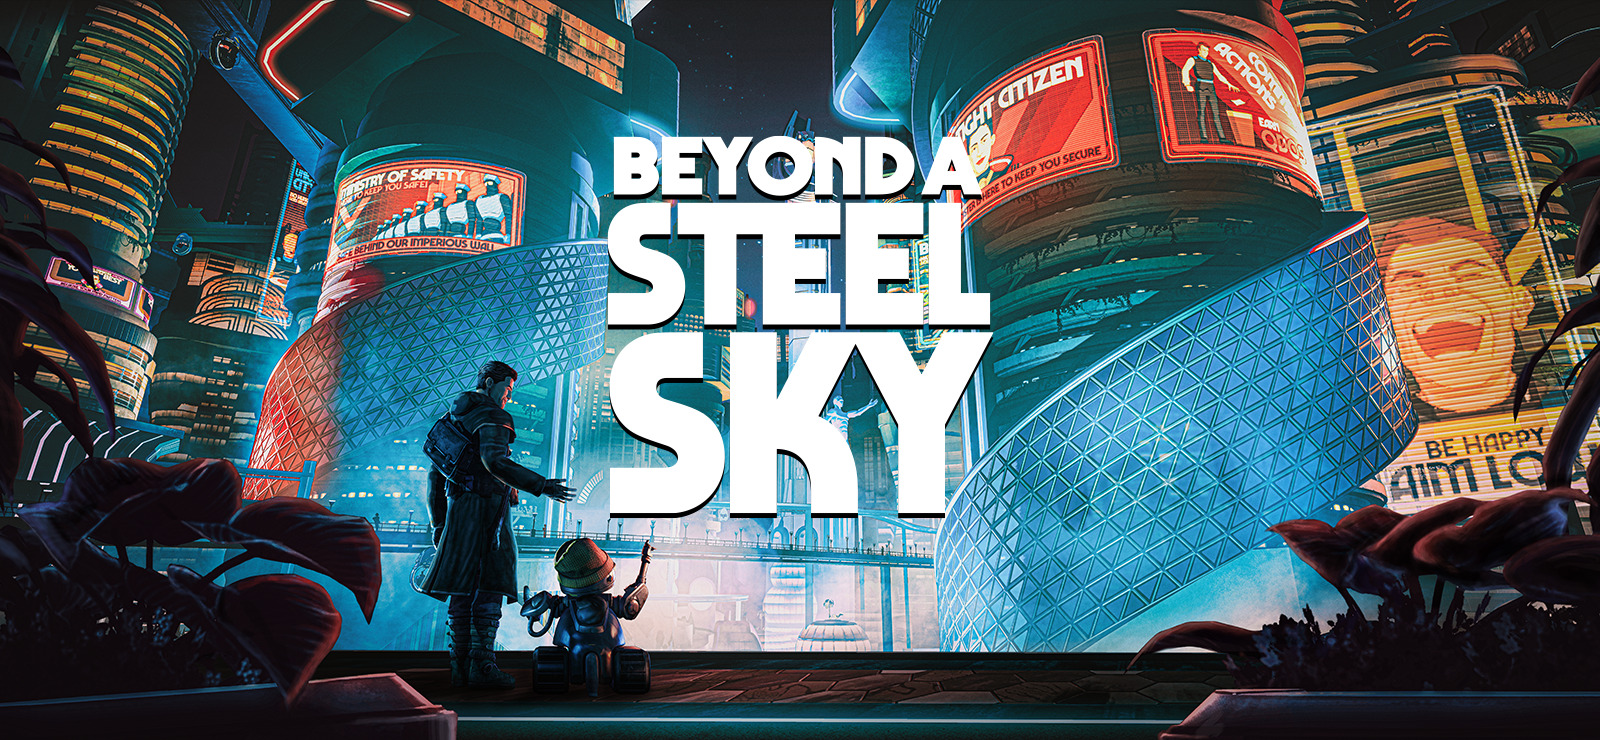 download beyond steel sky ps4